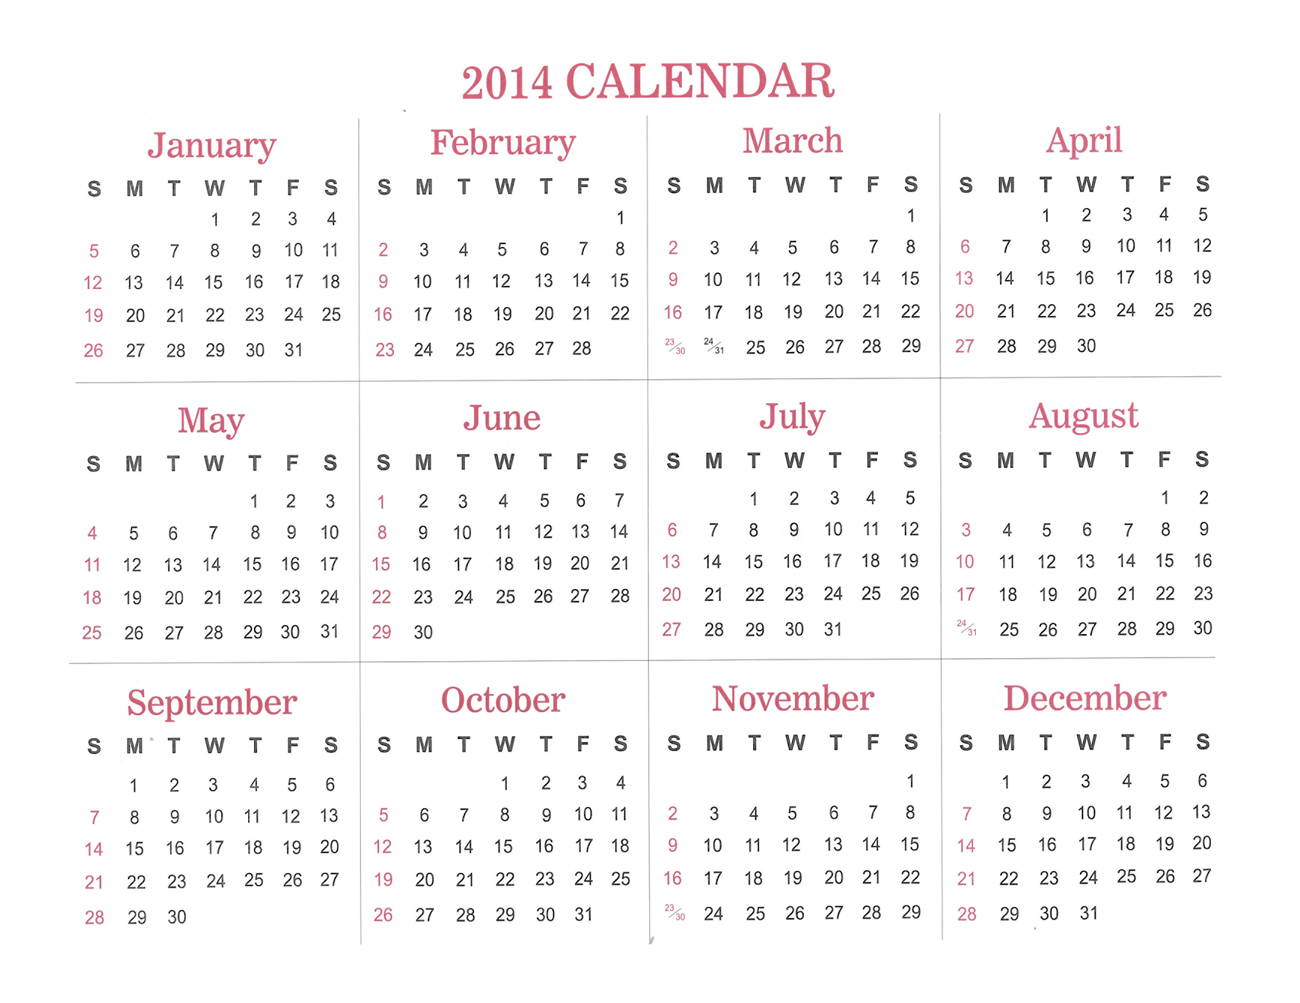 Back Cover: 2013 The Peoples Gospel Hour Calendar